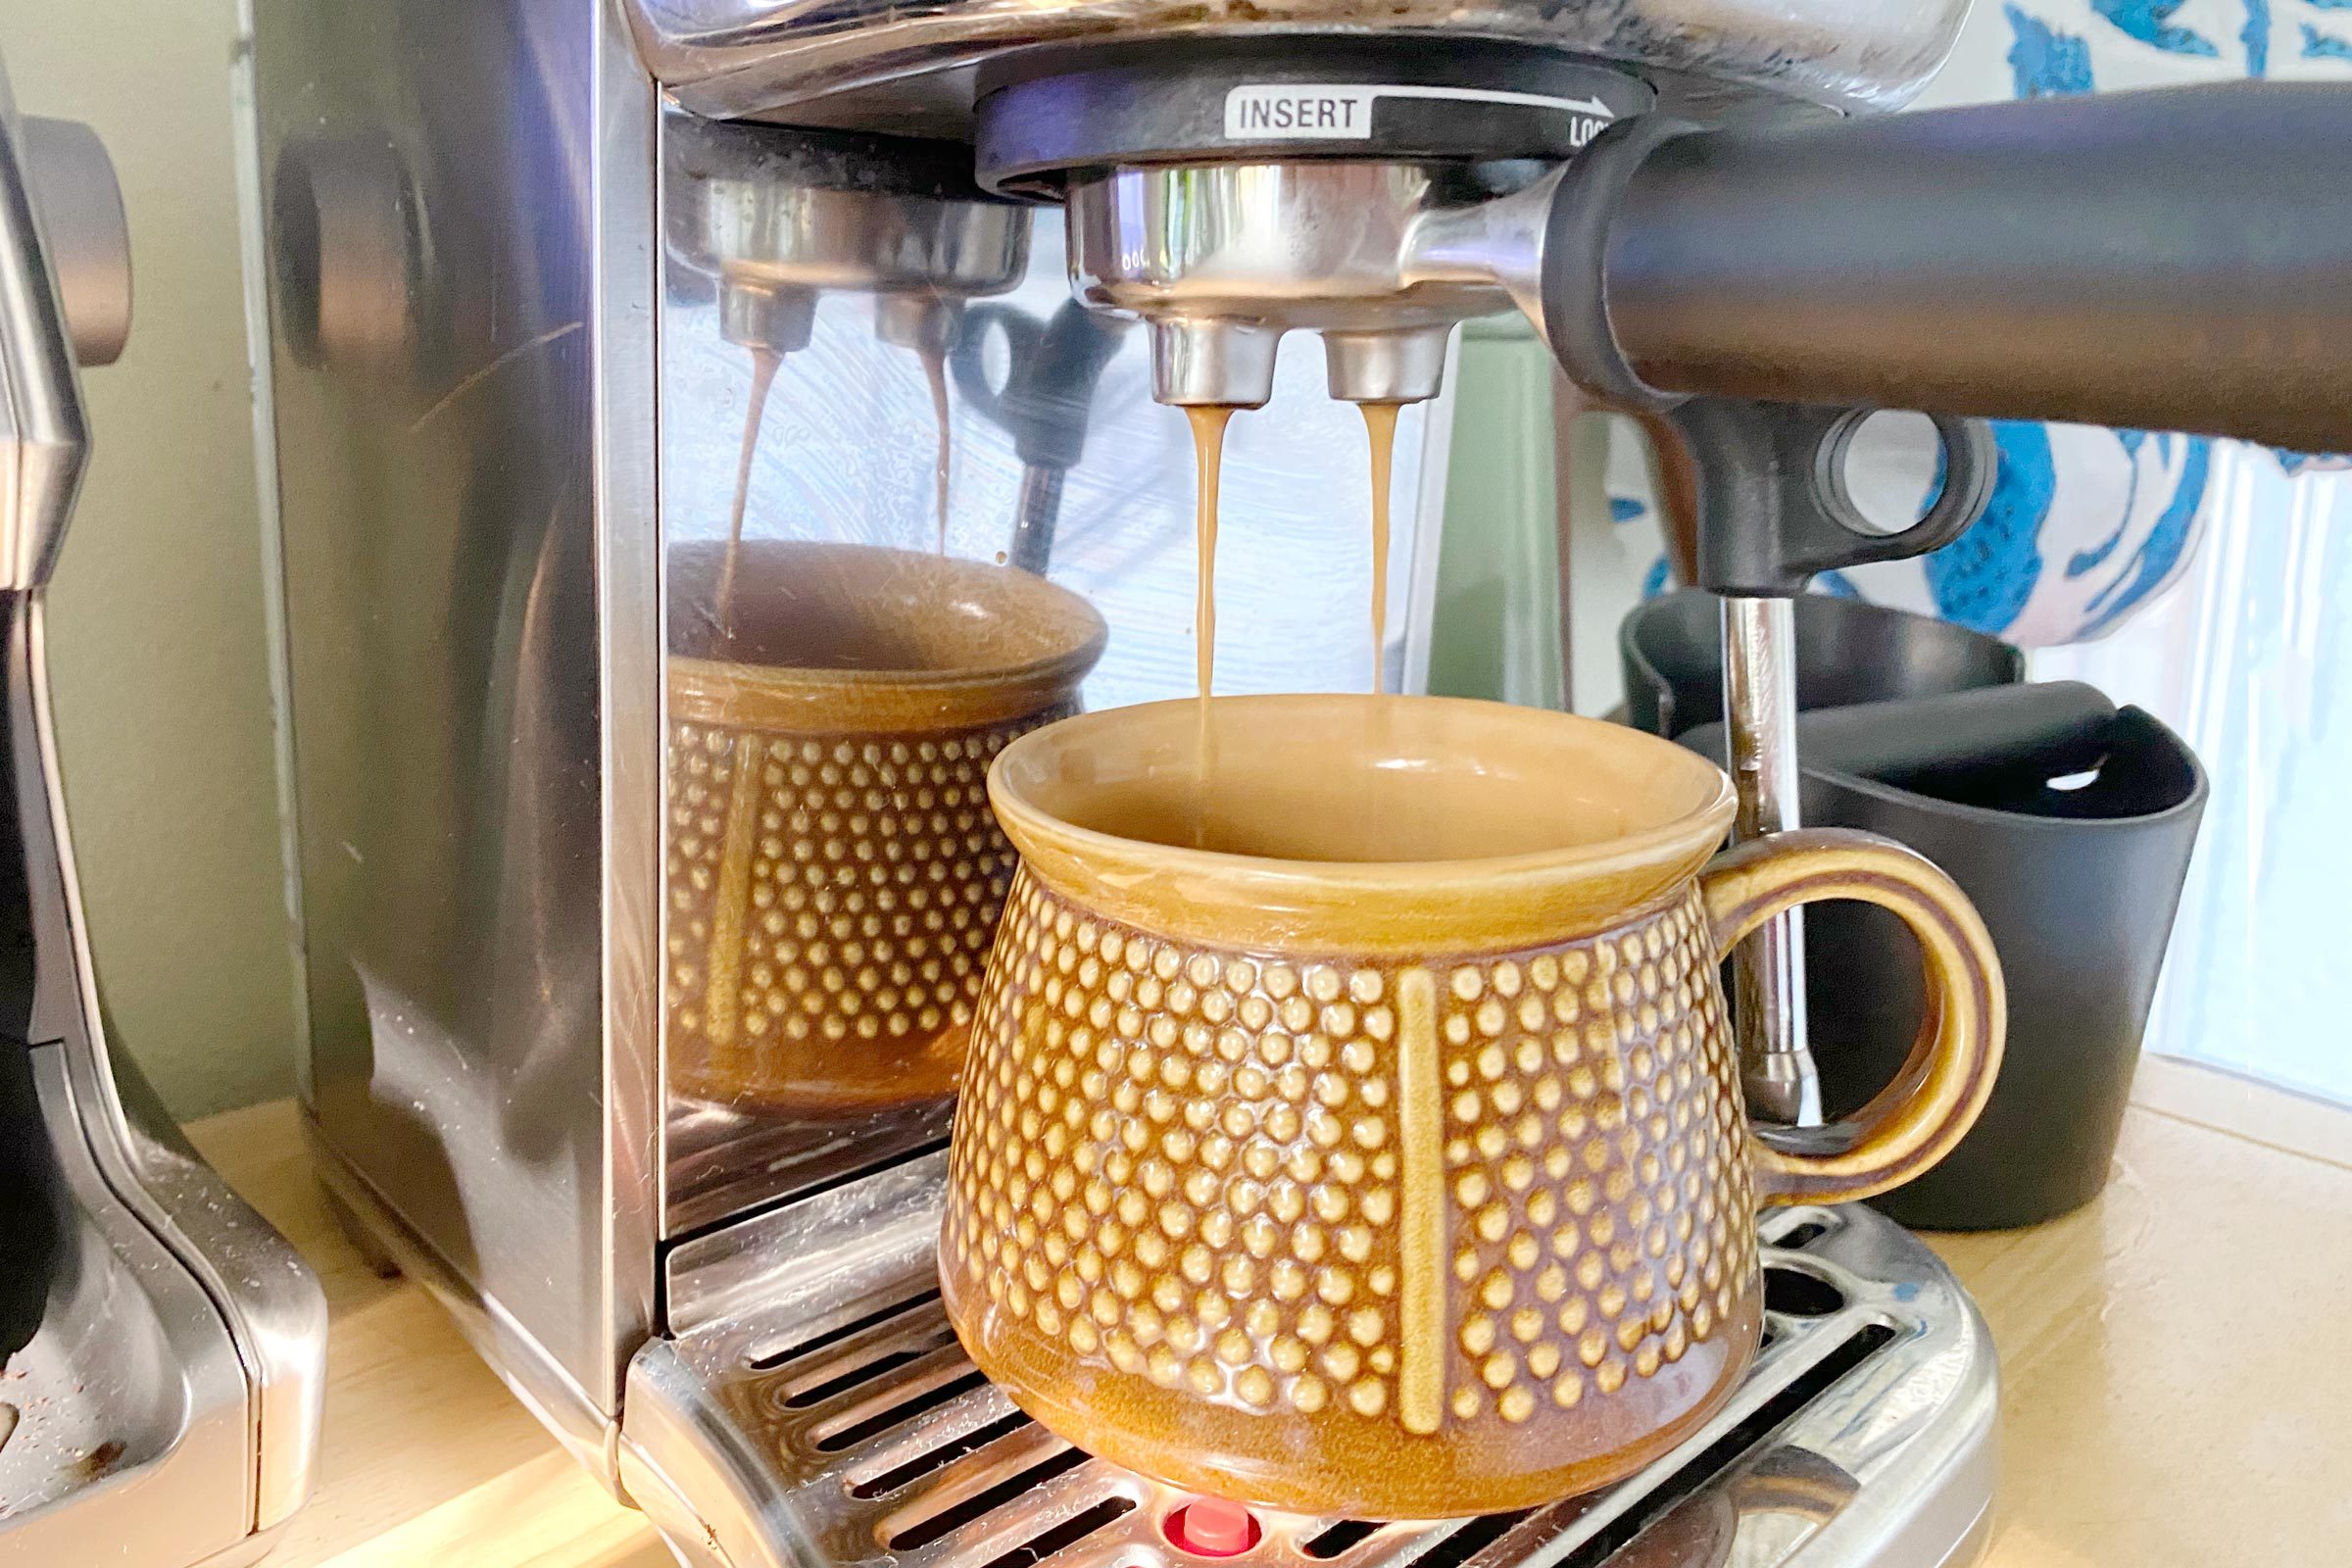 Breville Espresso machine with a mug